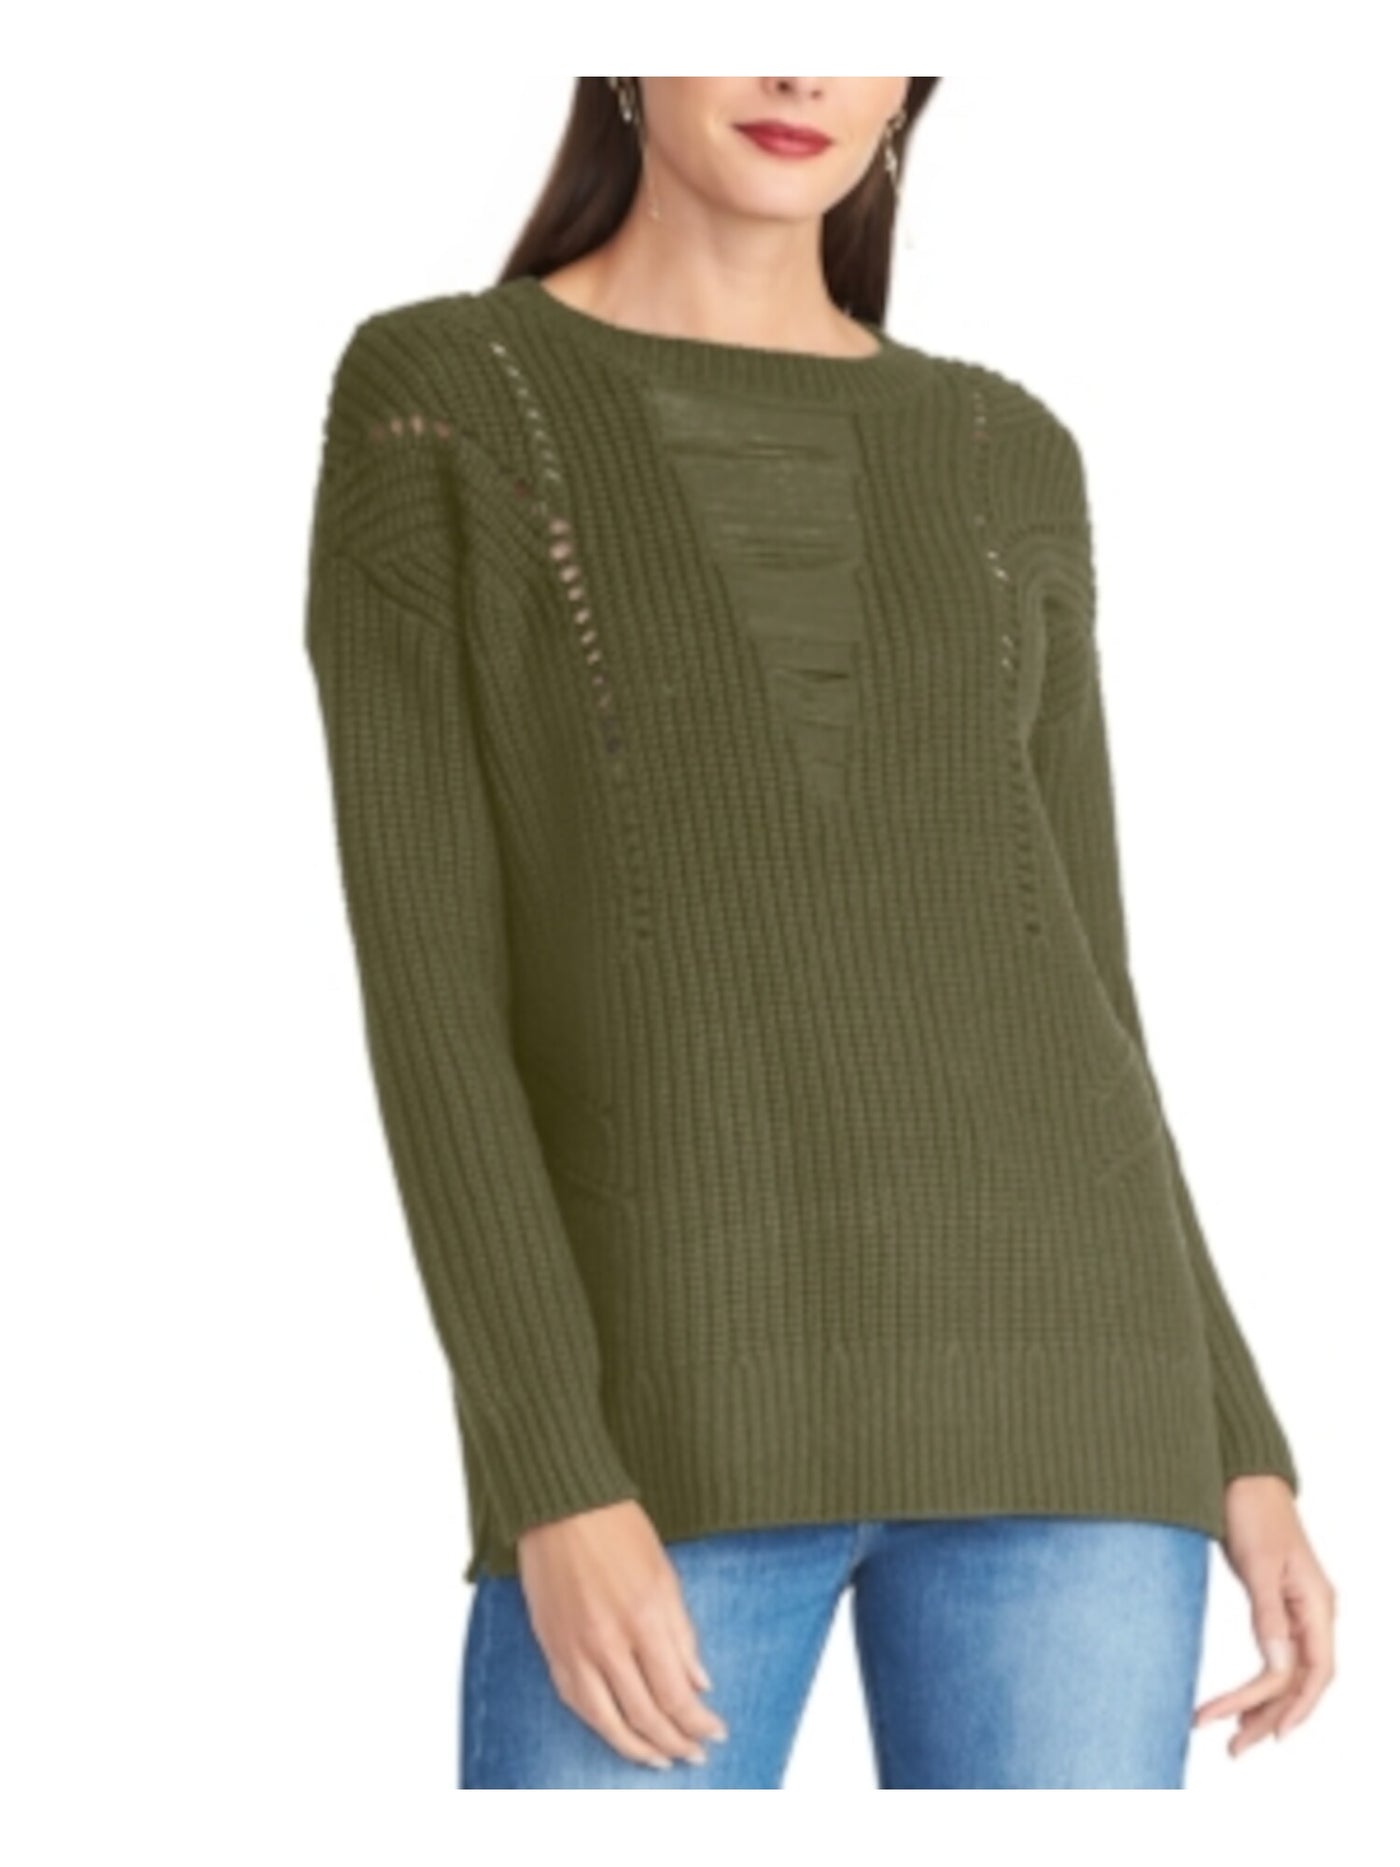 RACHEL RACHEL ROY Womens Green Long Sleeve Jewel Neck T-Shirt XL